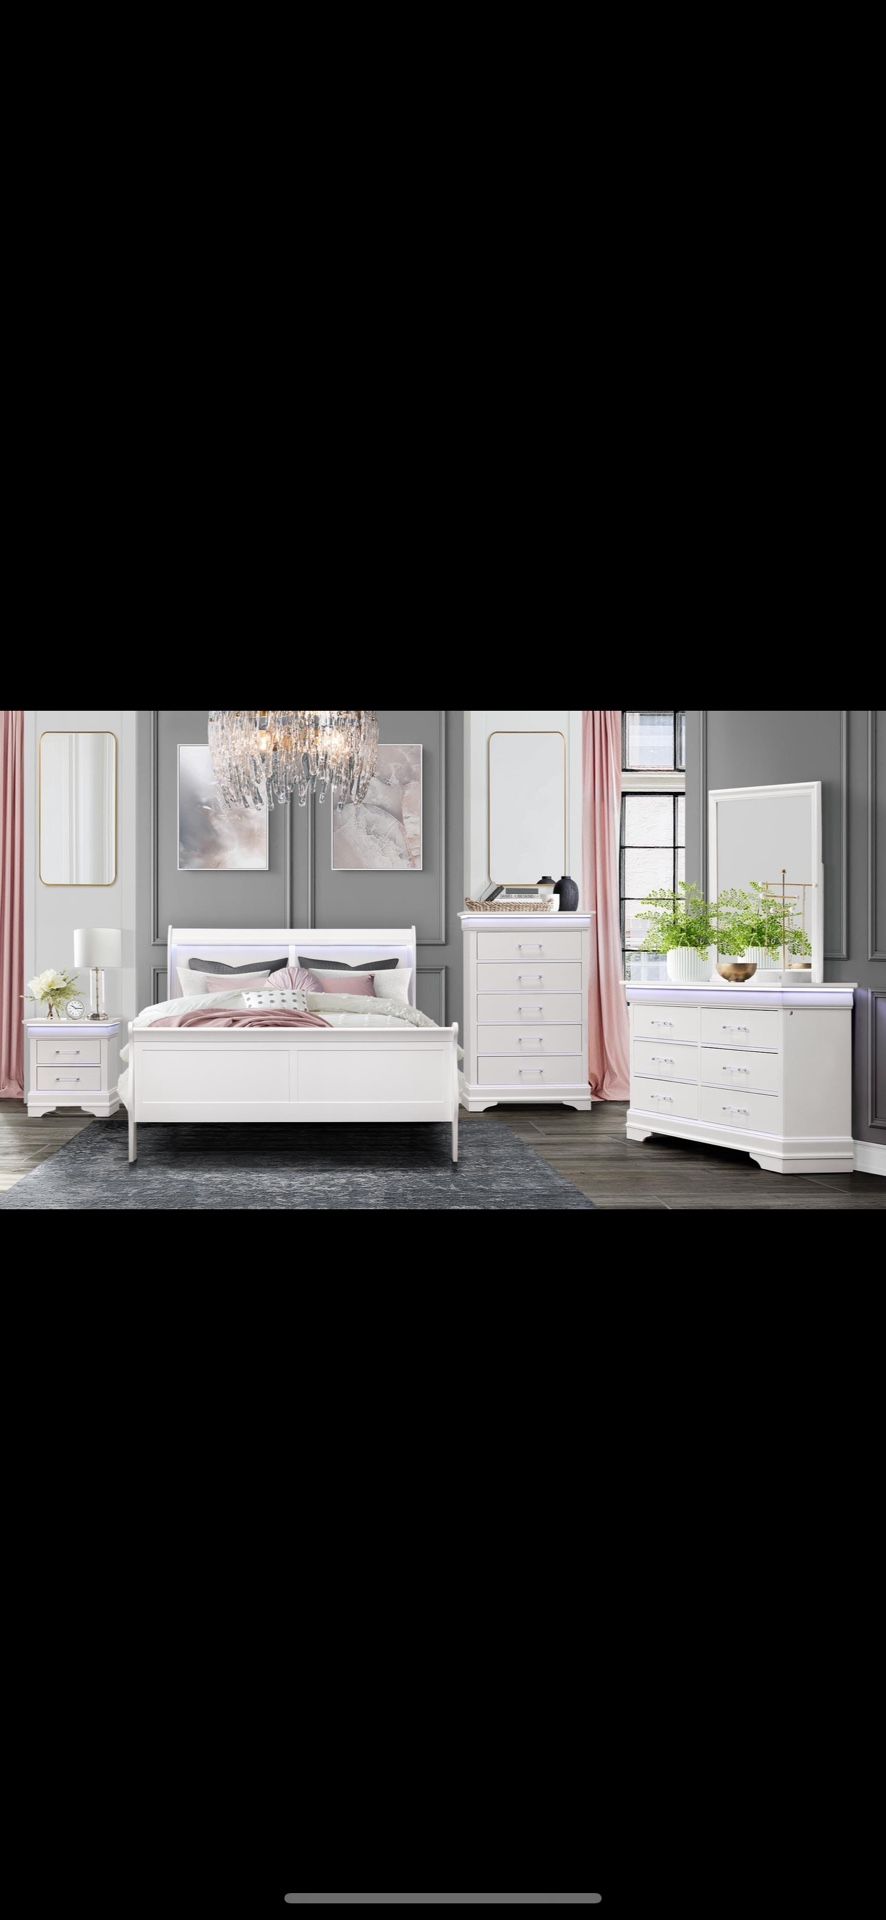 Brand New Complete Bedroom Set For $899